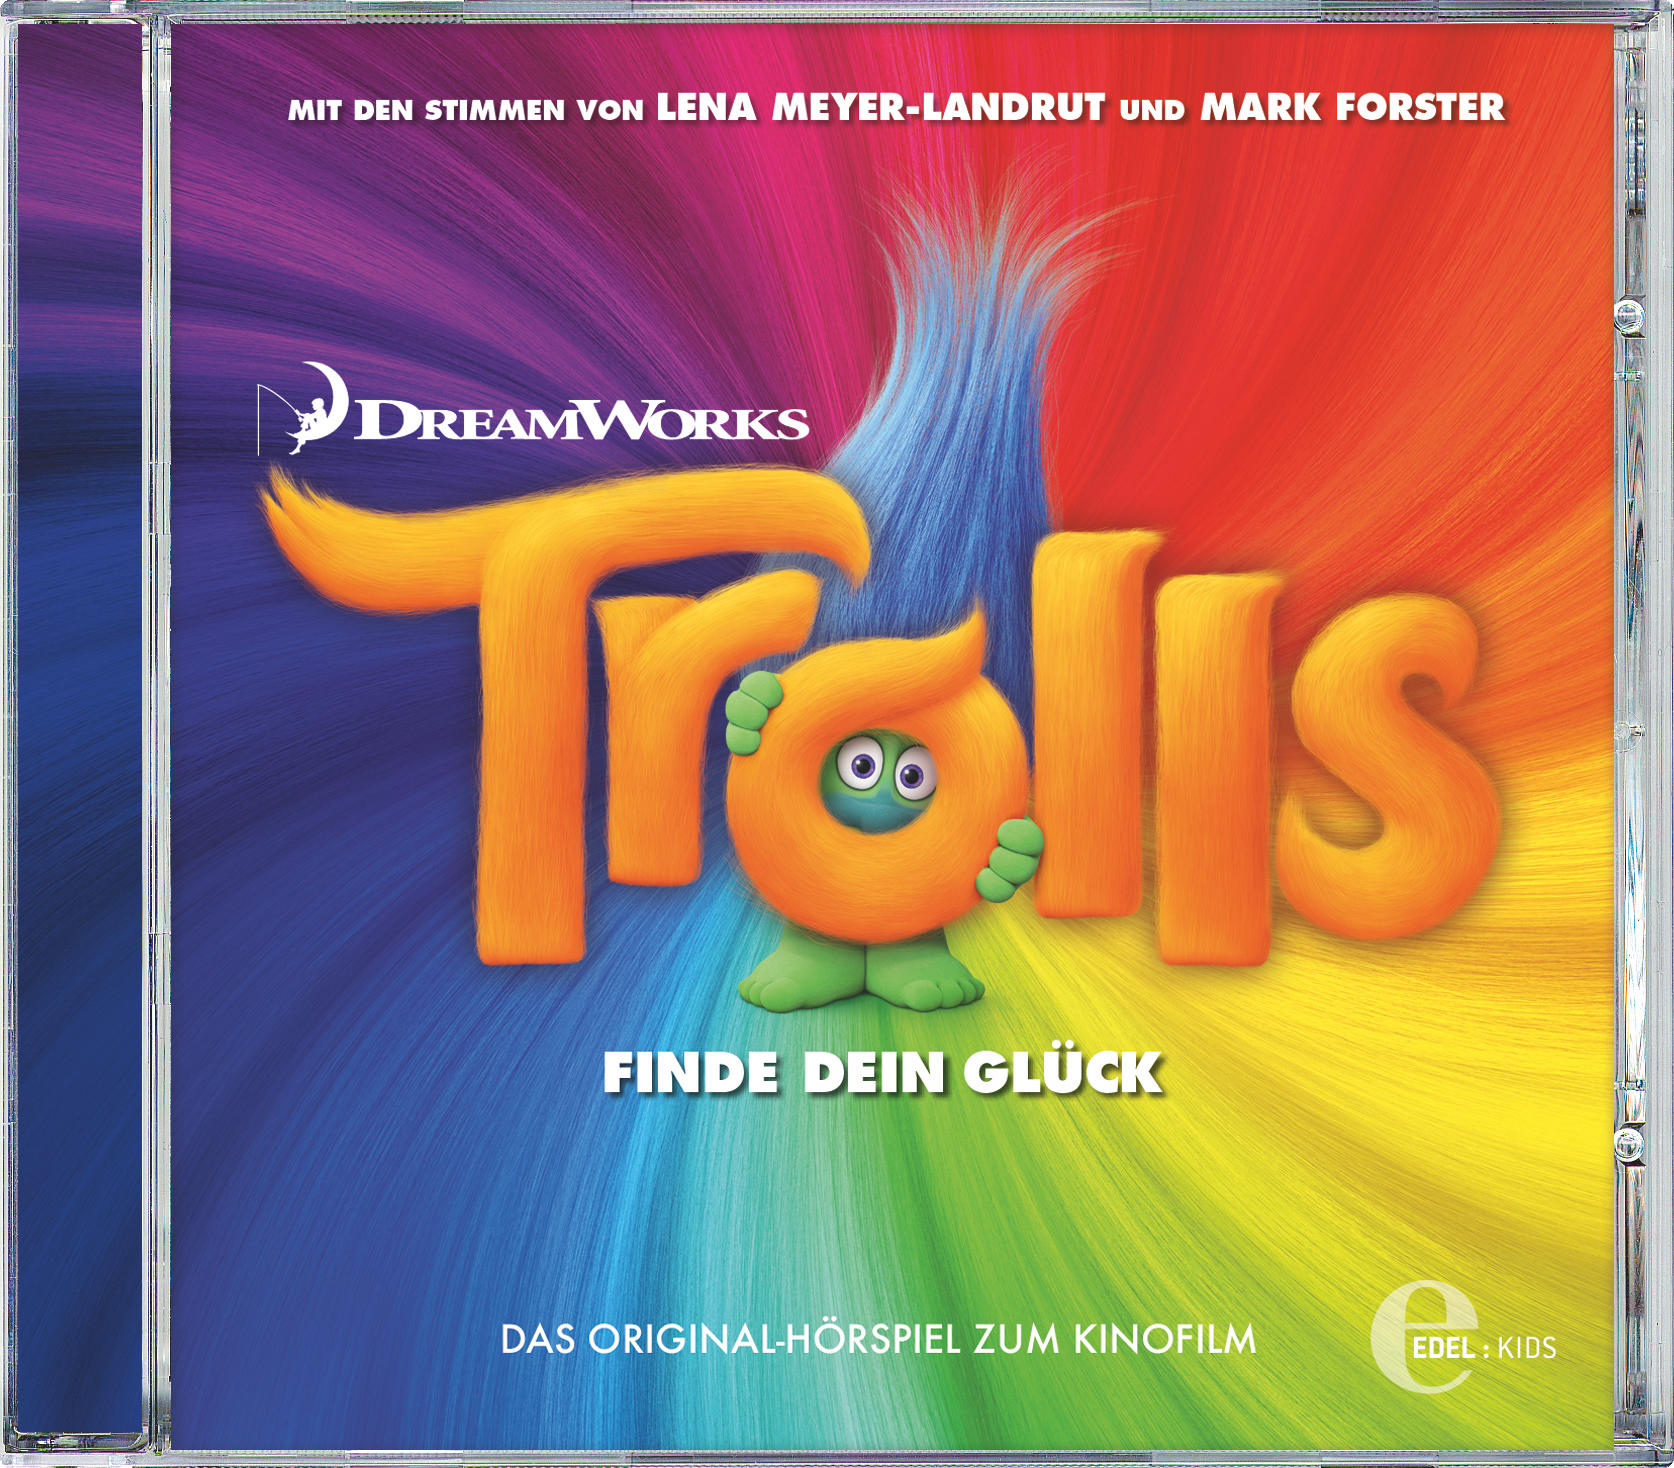 Kinofilm zum - Das (CD) - The Original-Hörspiel Trolls